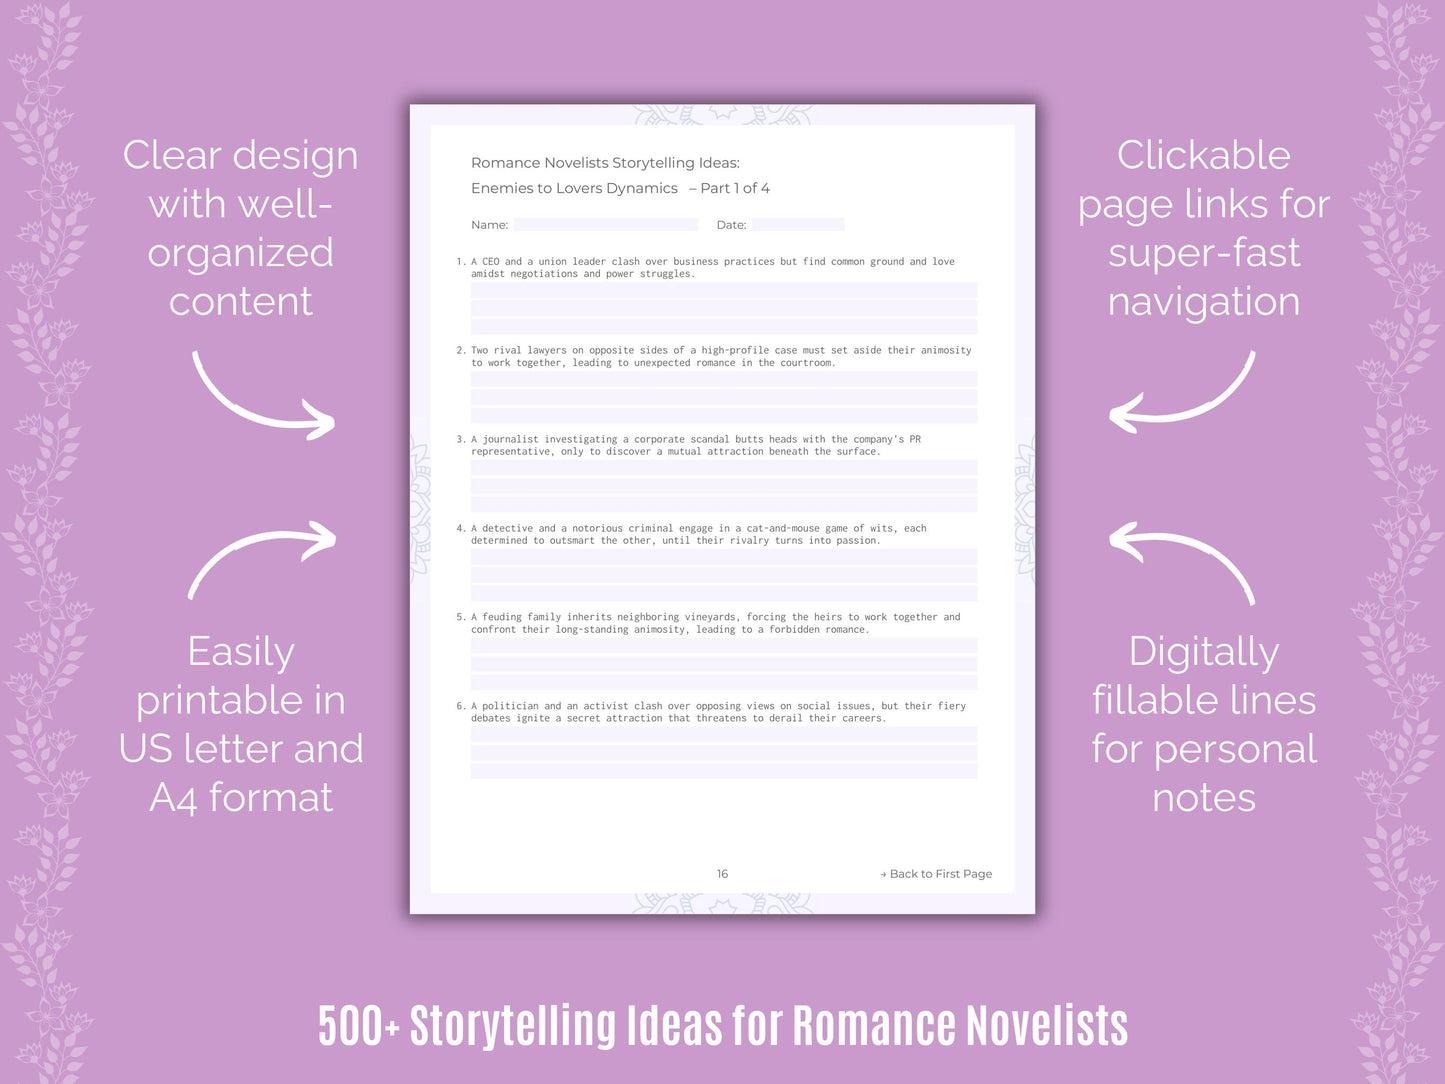 Romance Novelists Storytelling Ideas Resource